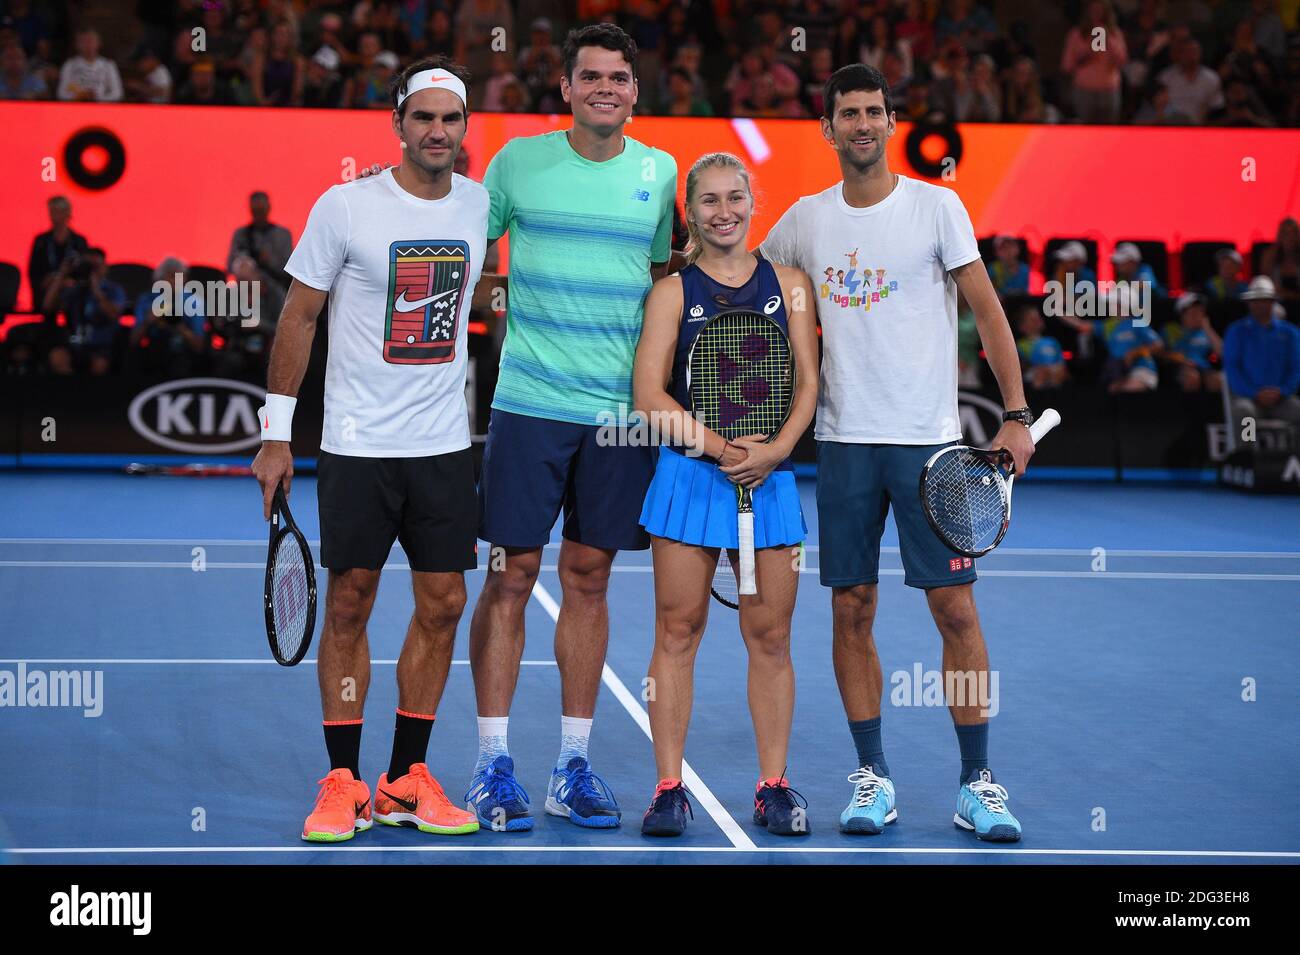 Roger Federer Switzerland Novak Djokovic Stockfotos und -bilder Kaufen -  Alamy